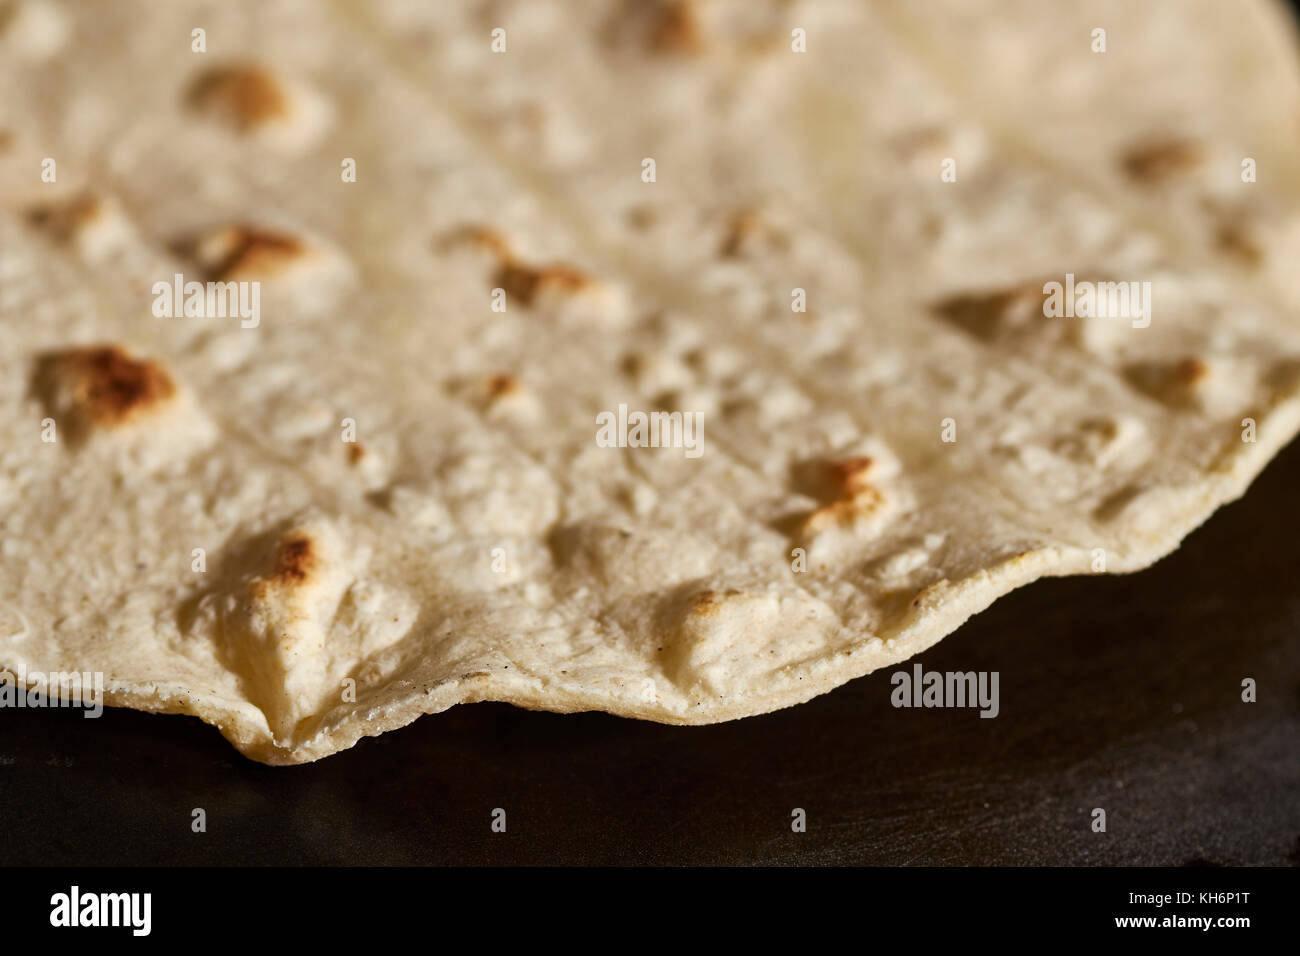 A corn tortilla cooking on a comal Stock Photo